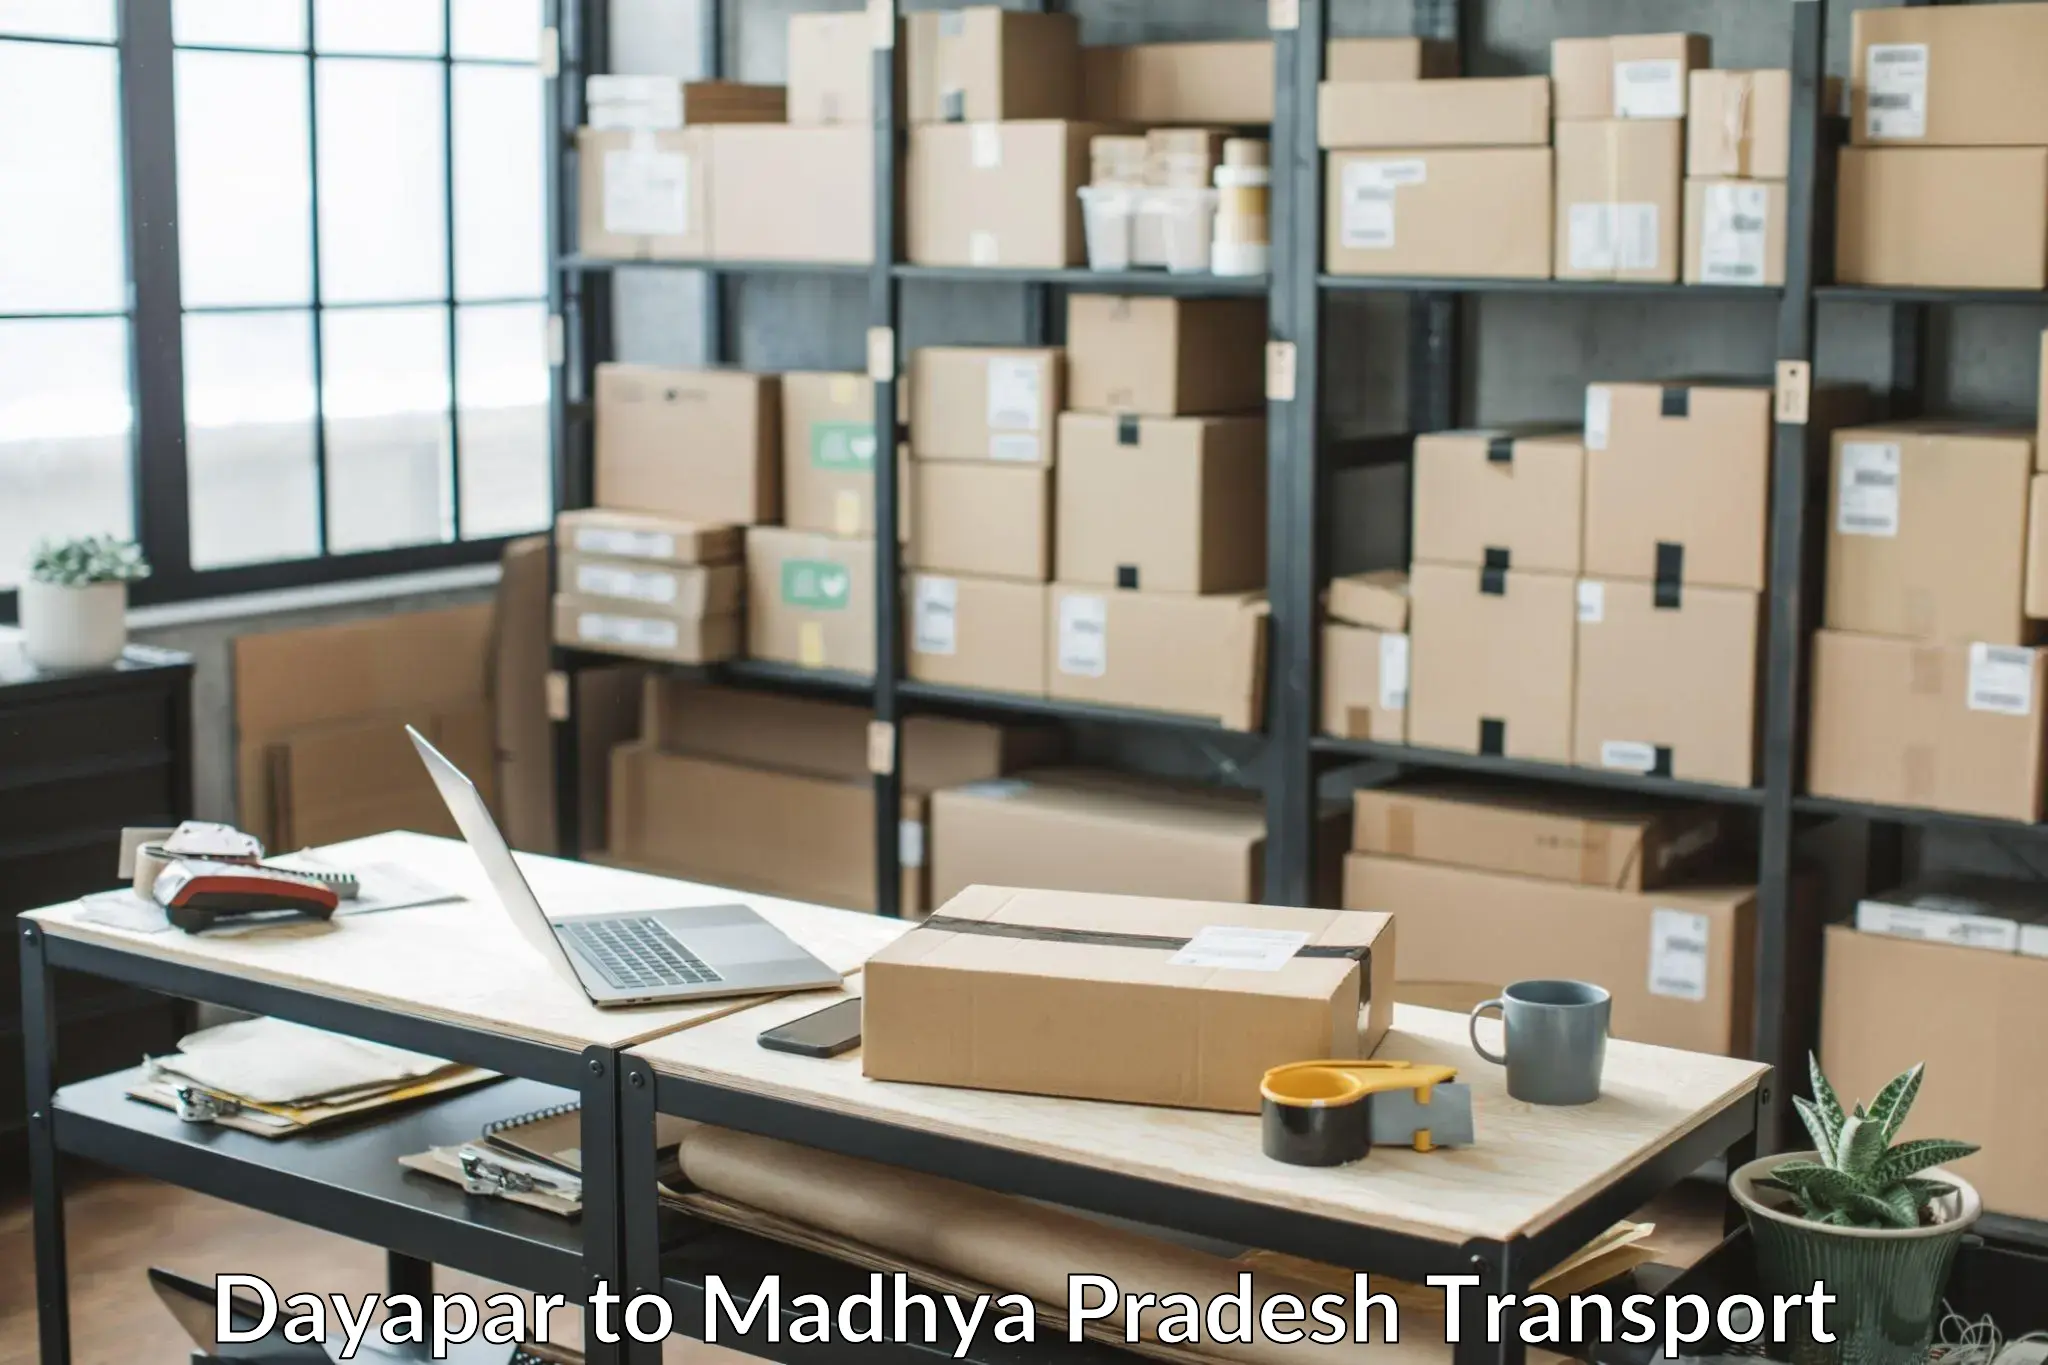 International cargo transportation services Dayapar to Chand Chaurai